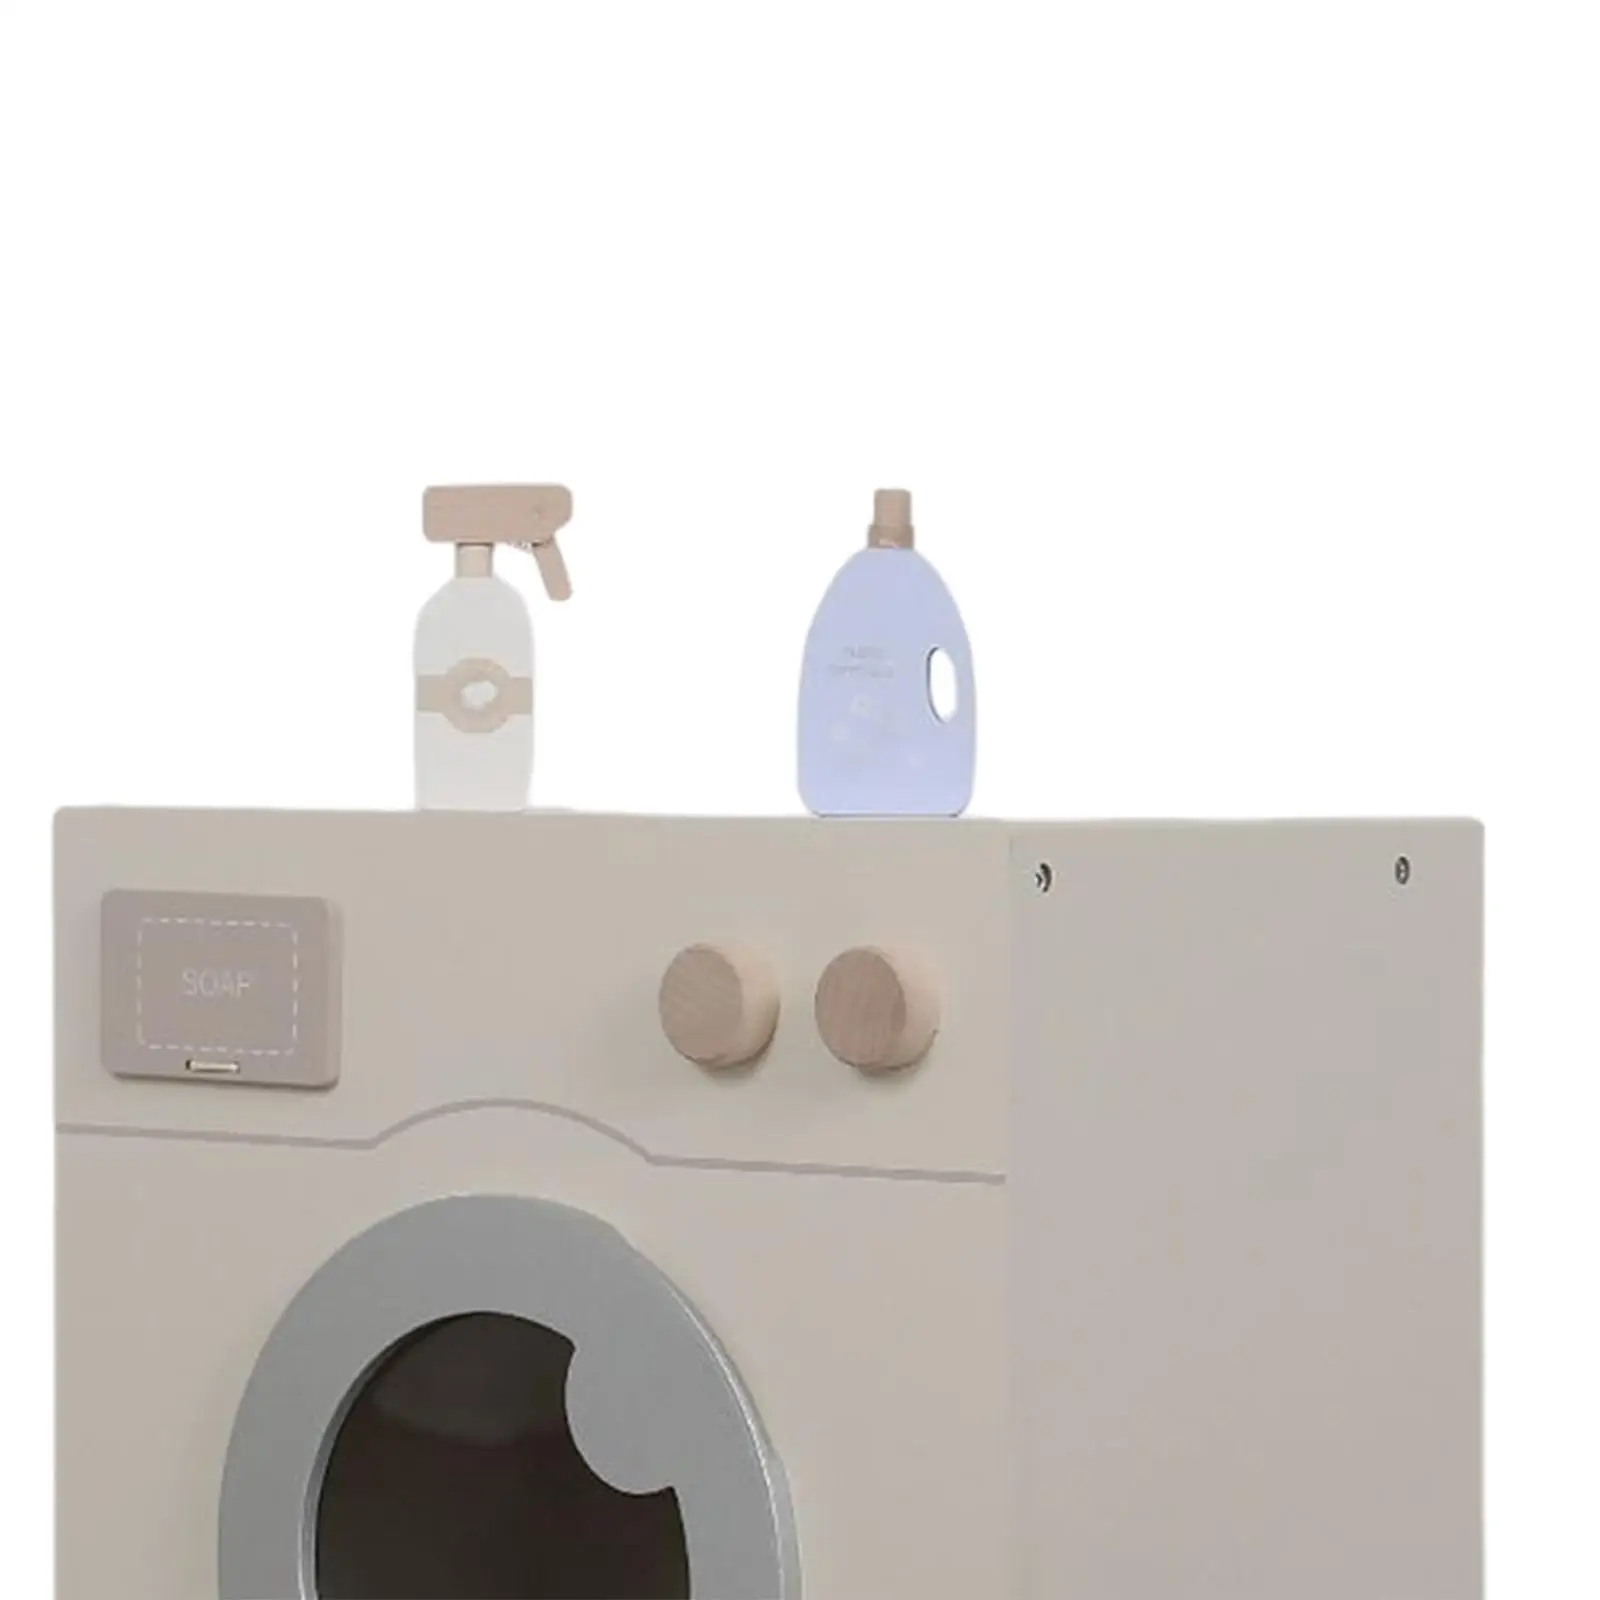 Wooden Washing Machine Playset Appliance Pretend Play,, Doll